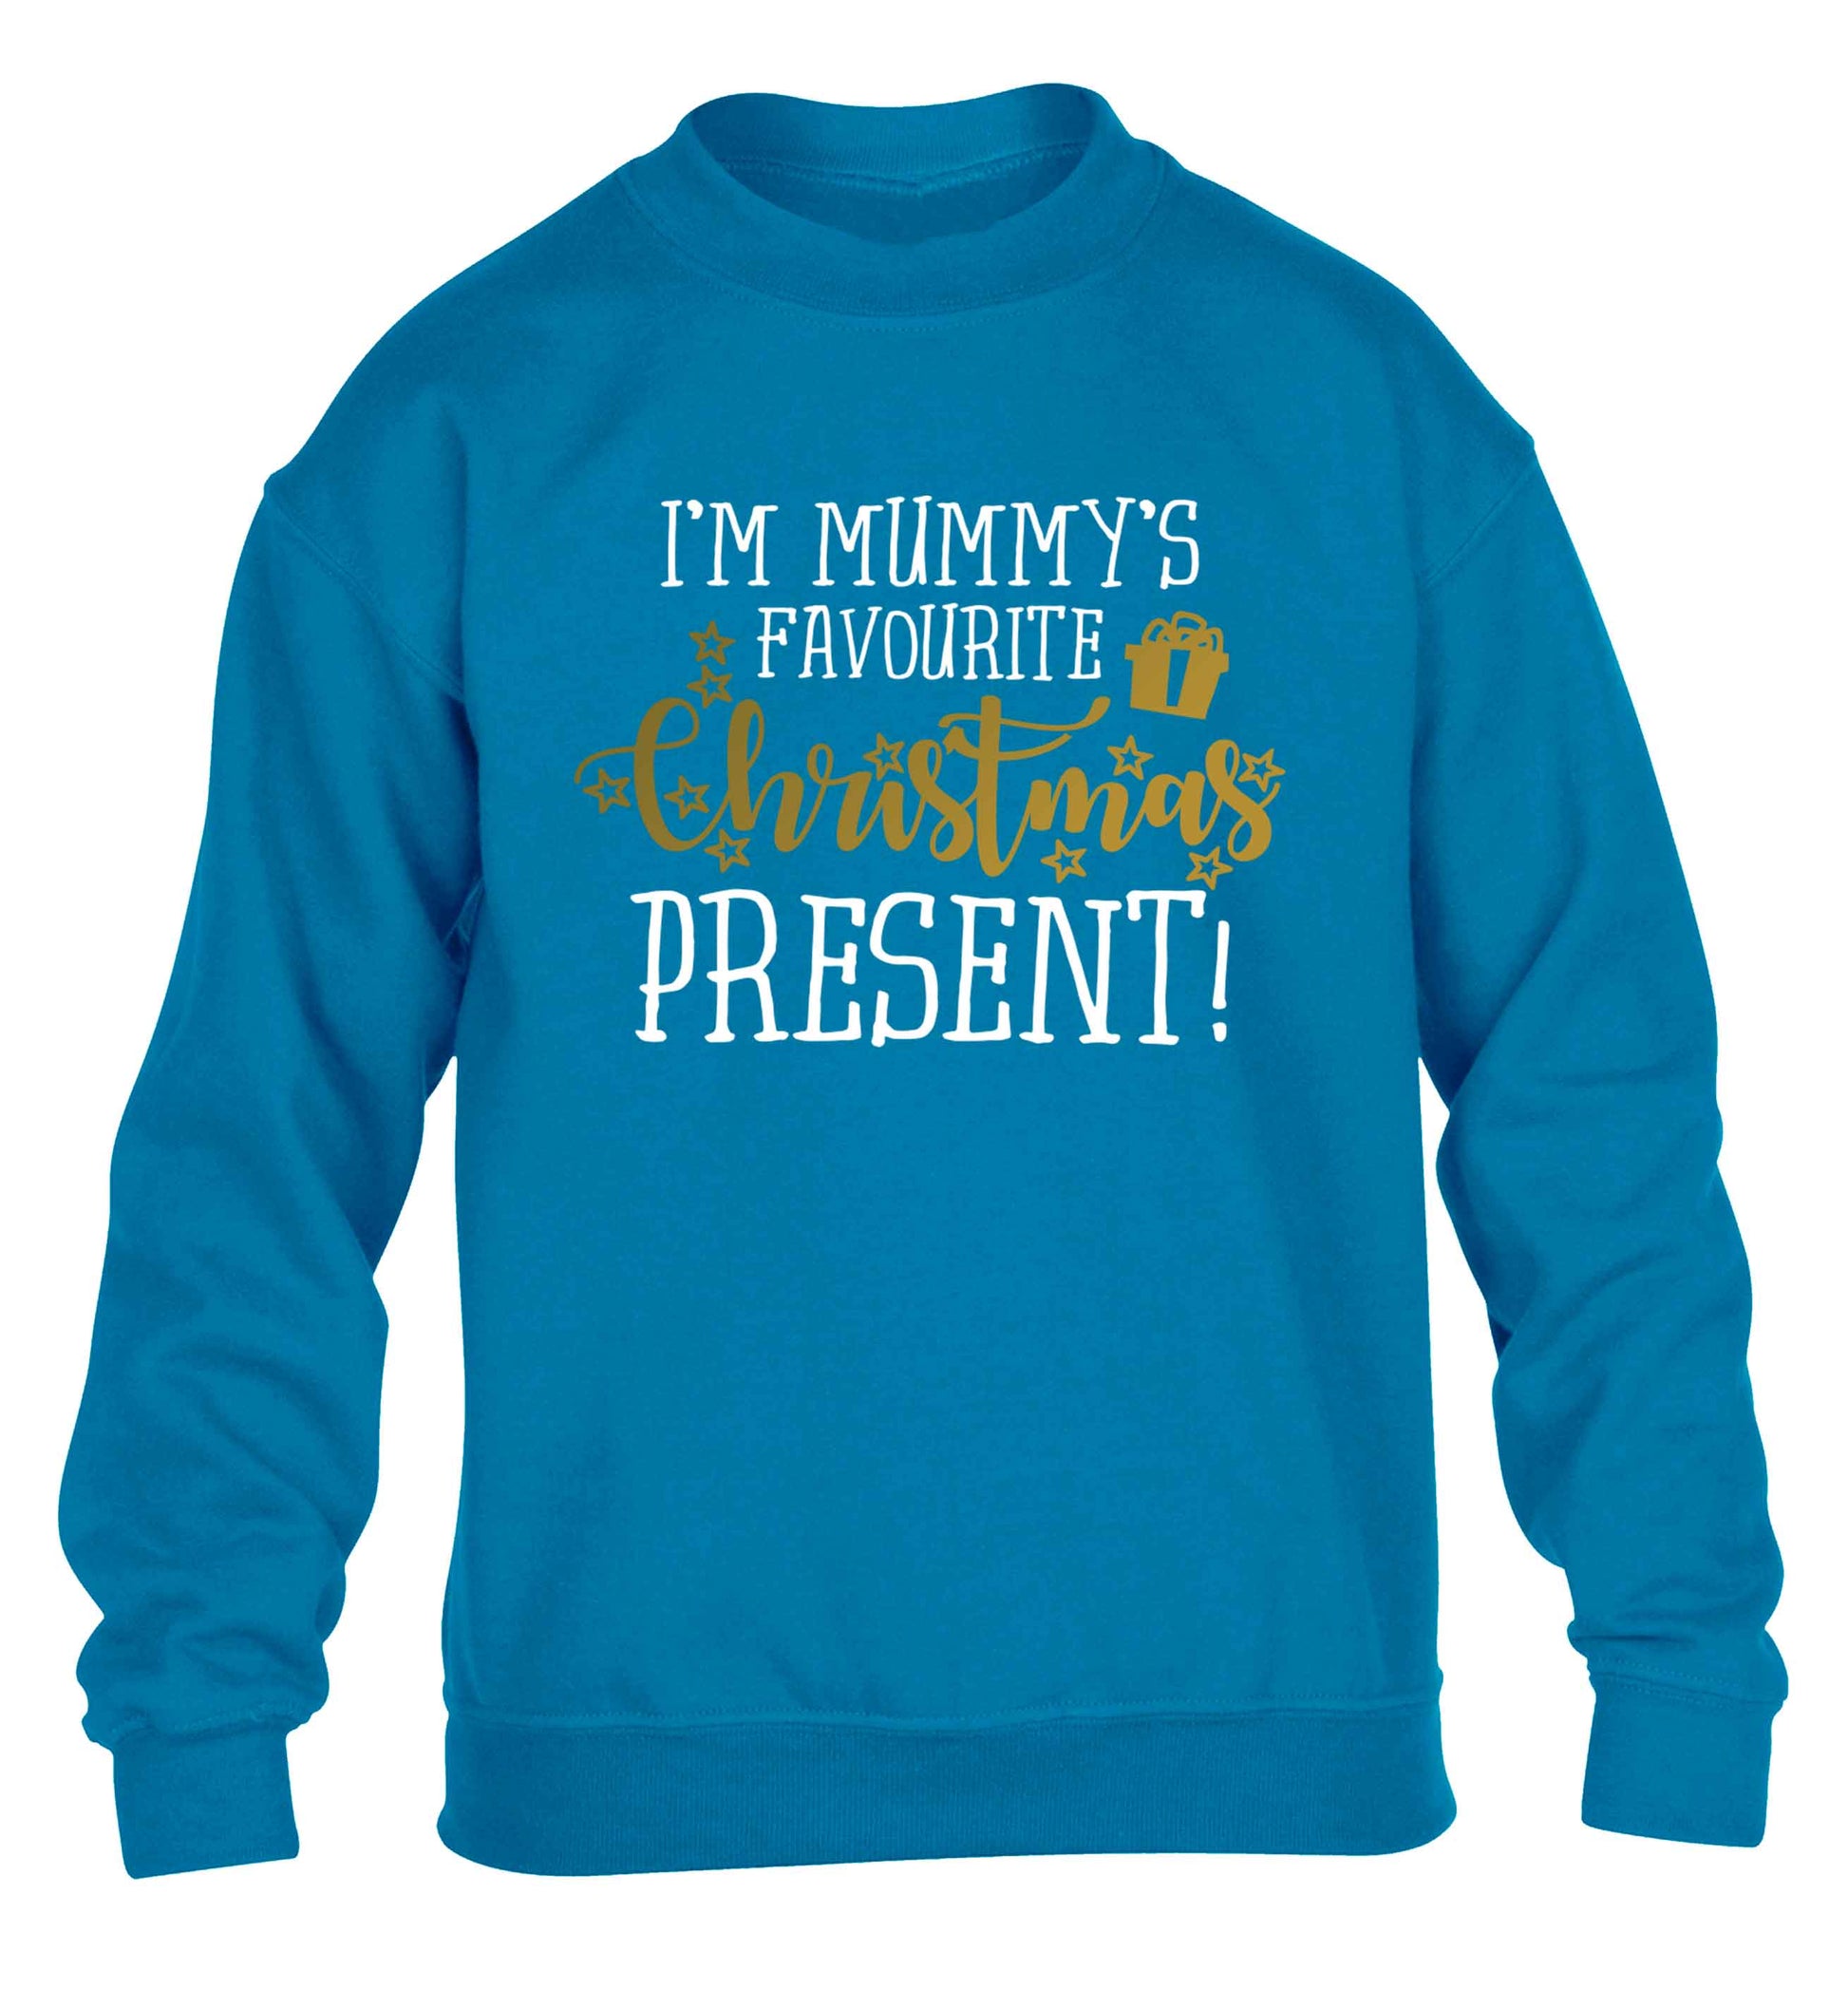 I'm Mummy's favourite Christmas present children's blue sweater 12-13 Years